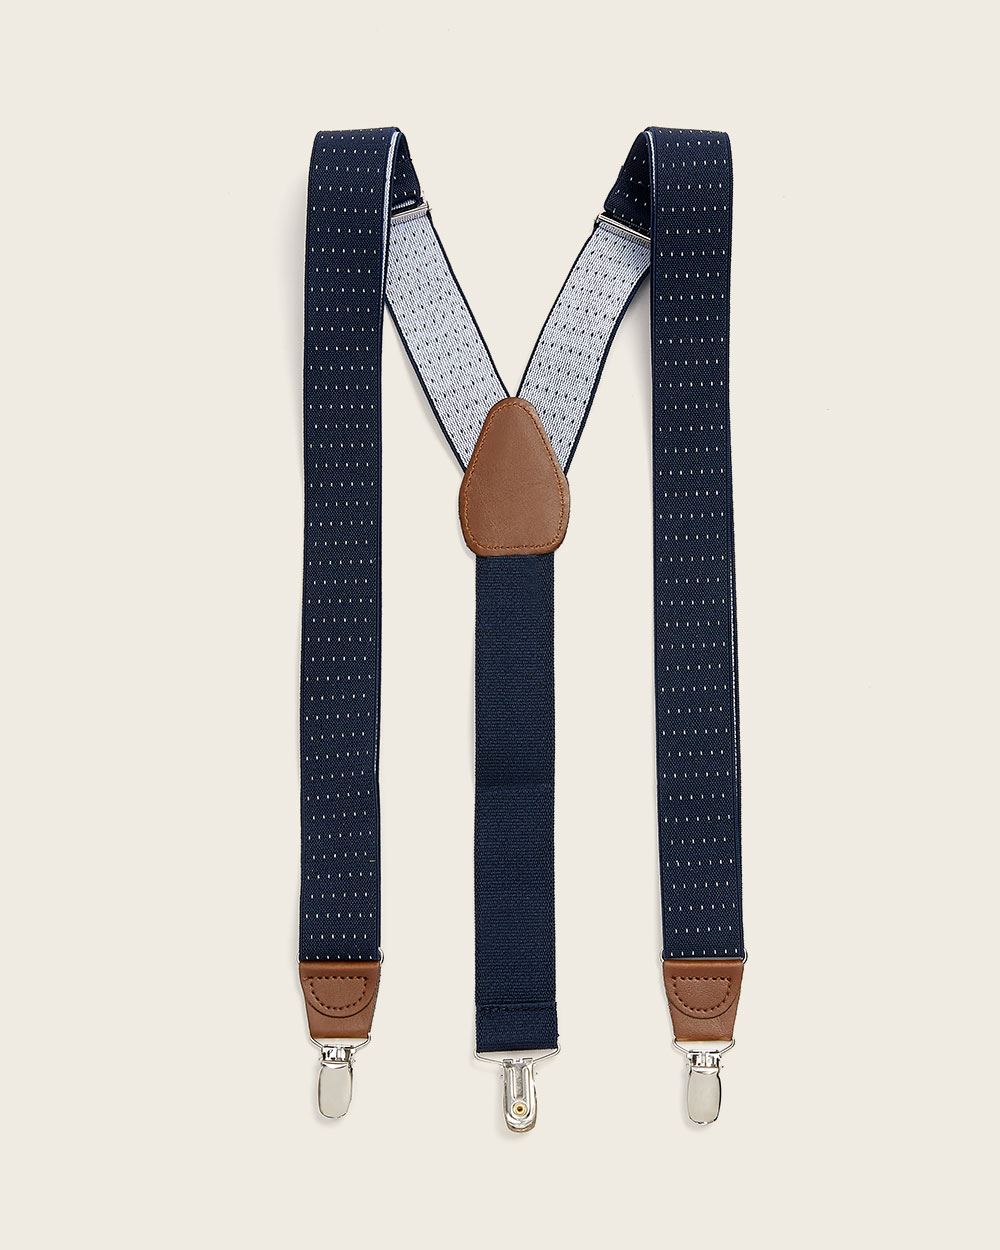 Dotted navy Elastic Suspenders